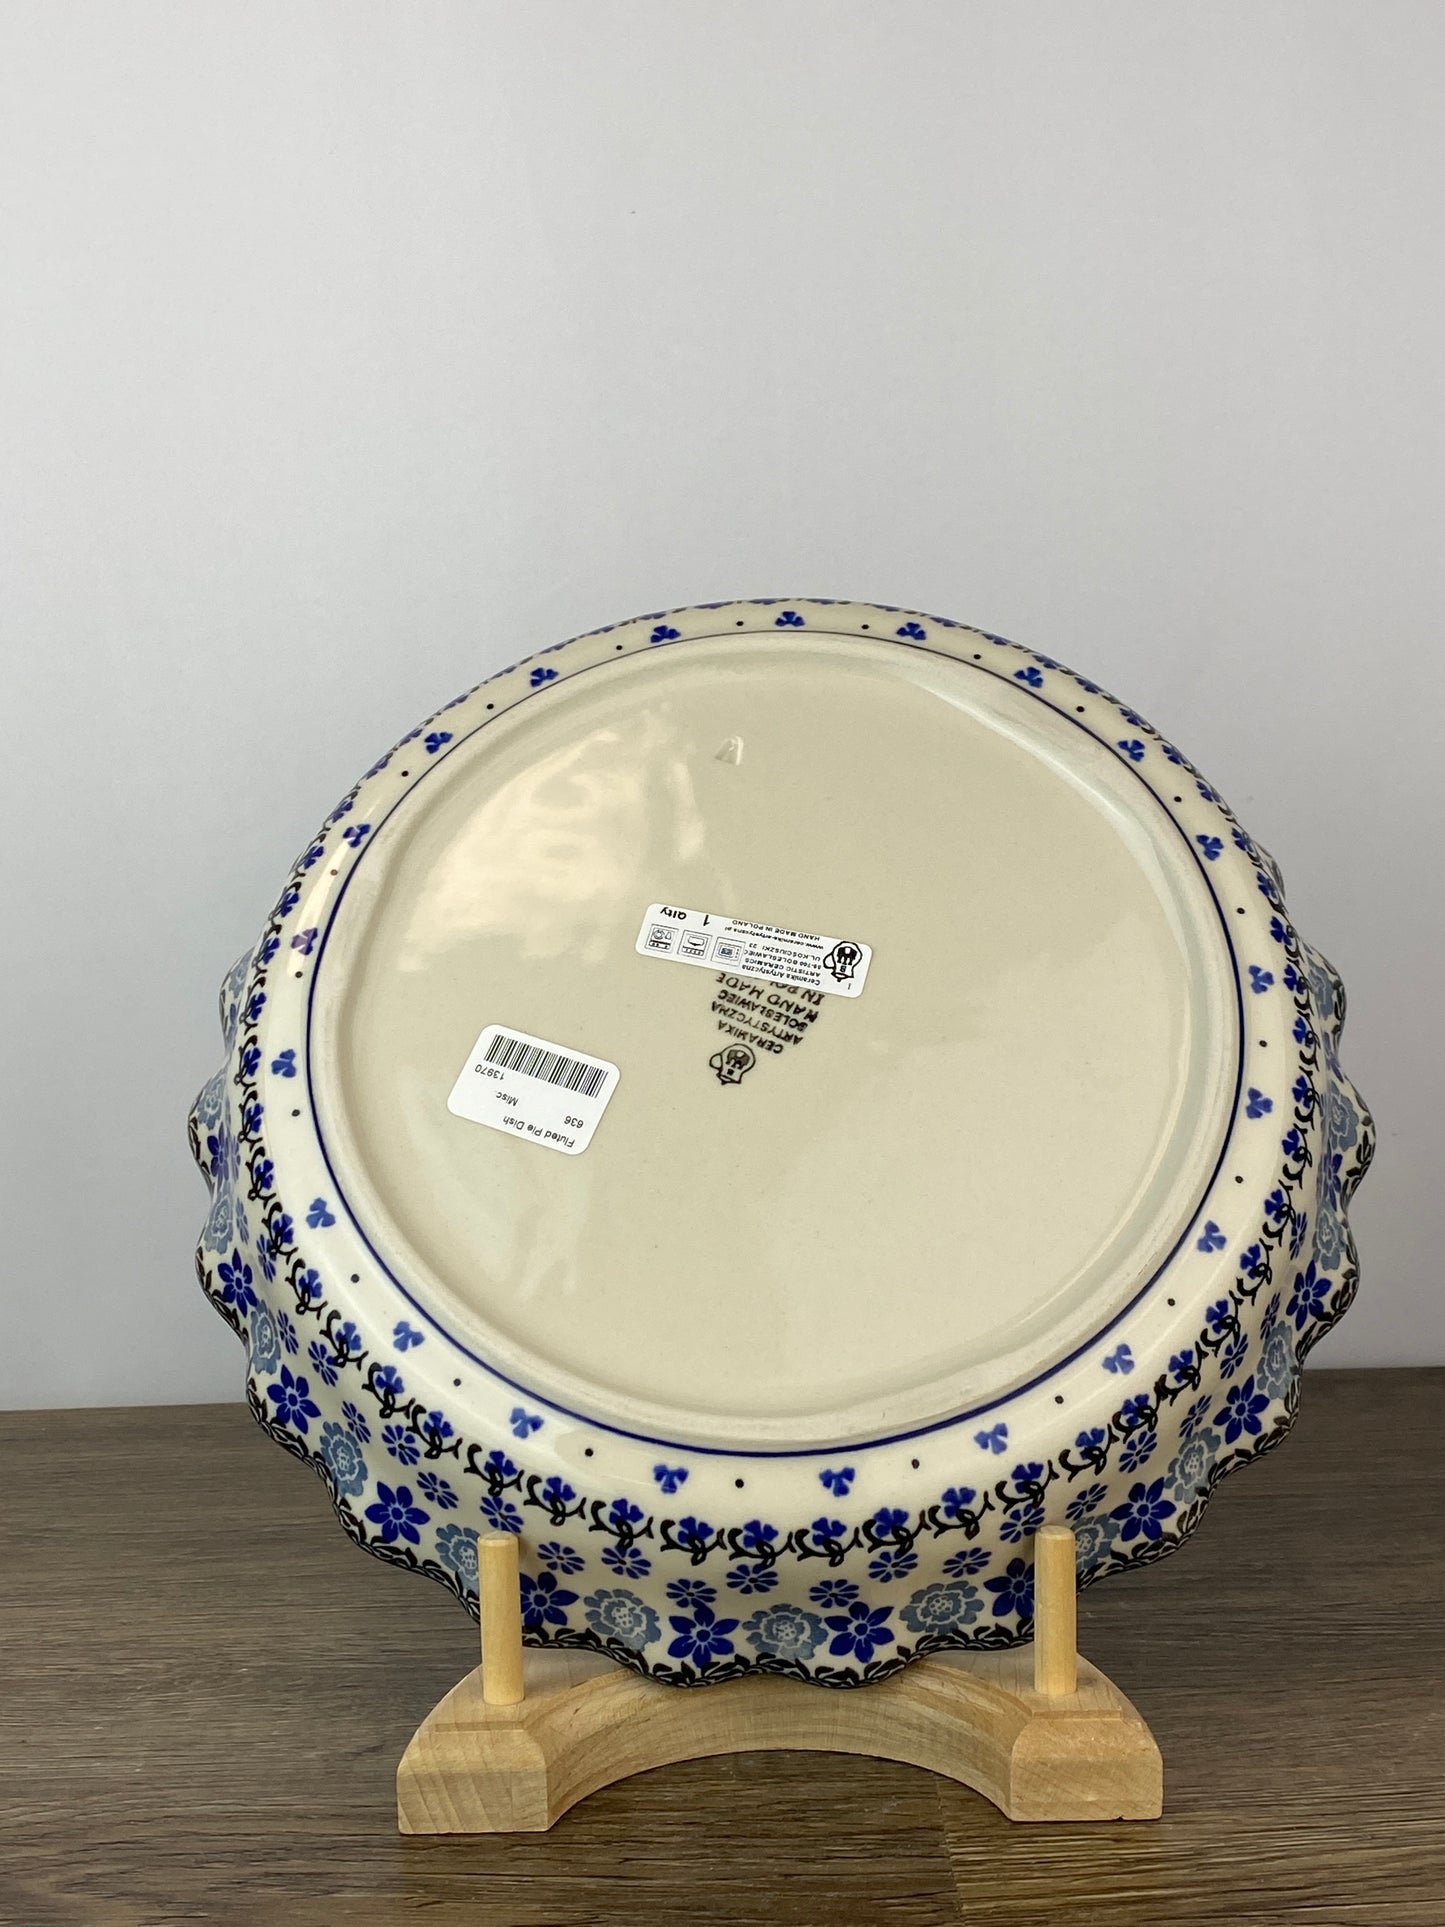 Ruffled Pie Plate / Round Baking Dish - Shape 636 - Pattern 1829